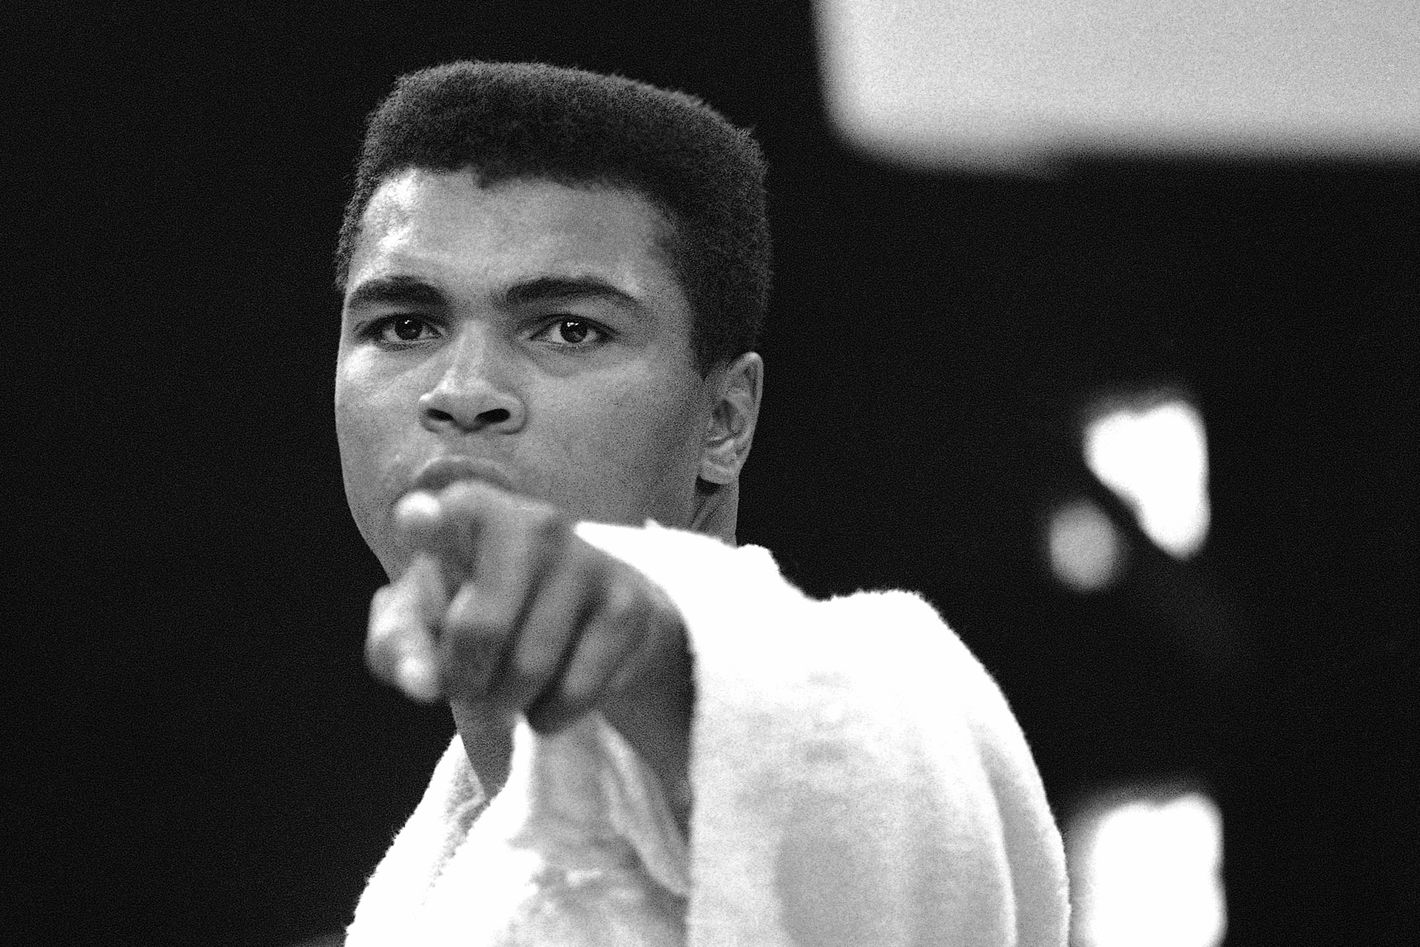 Obama, Kareem Abdul-Jabbar, Others React to Muhammad Ali's Death